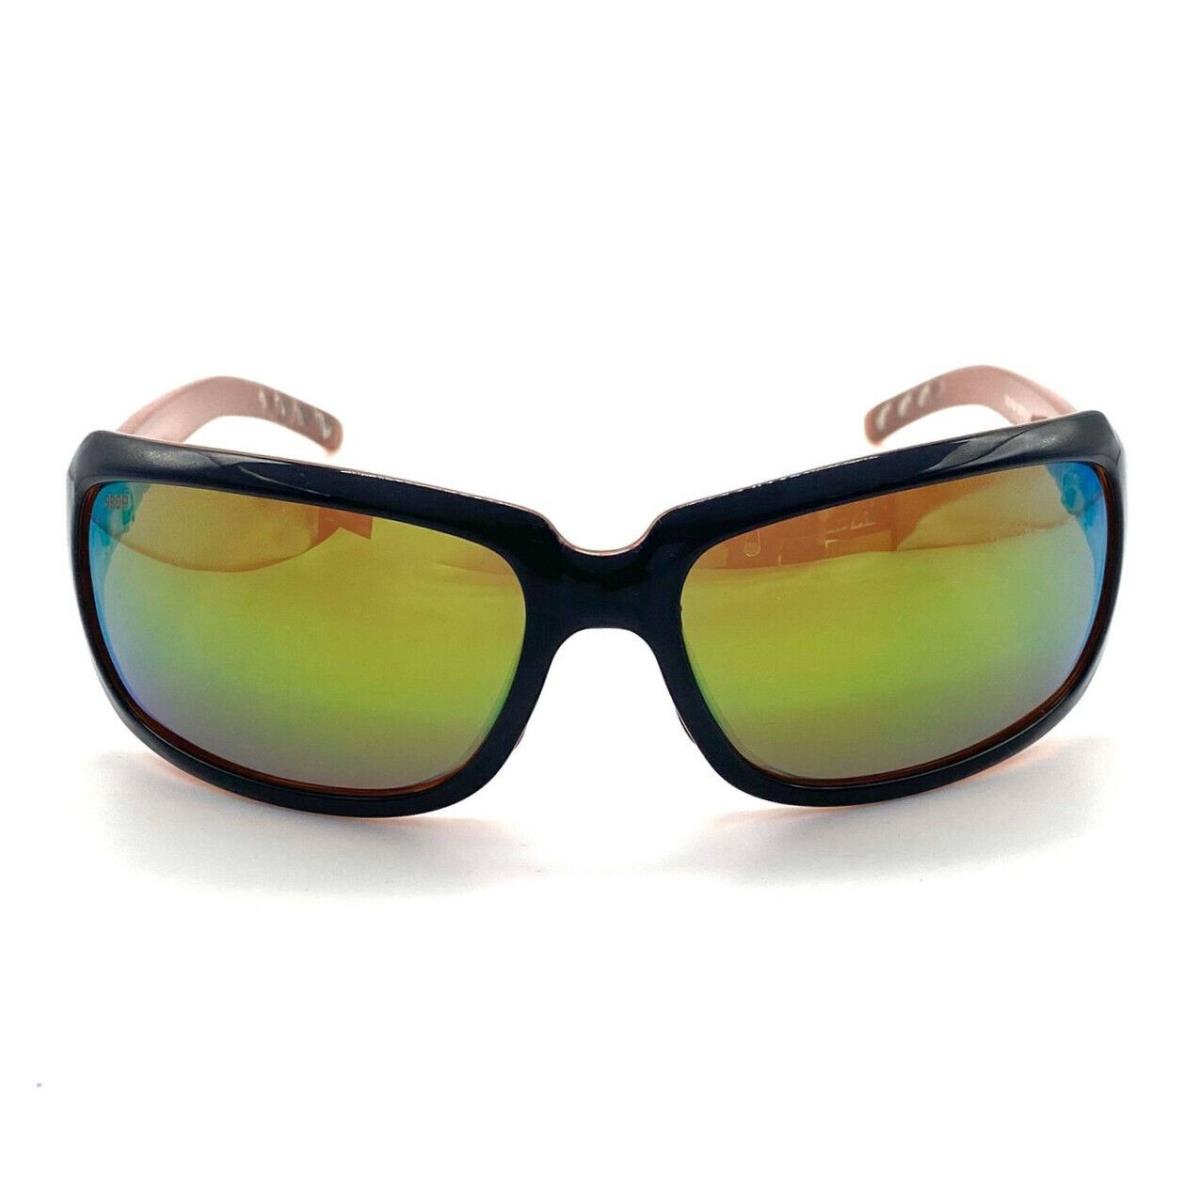 Costa Del Mar Isabela Sunglasses Black/coral/green Mirror 580Plastic - Frame: Black/Coral, Lens: Black